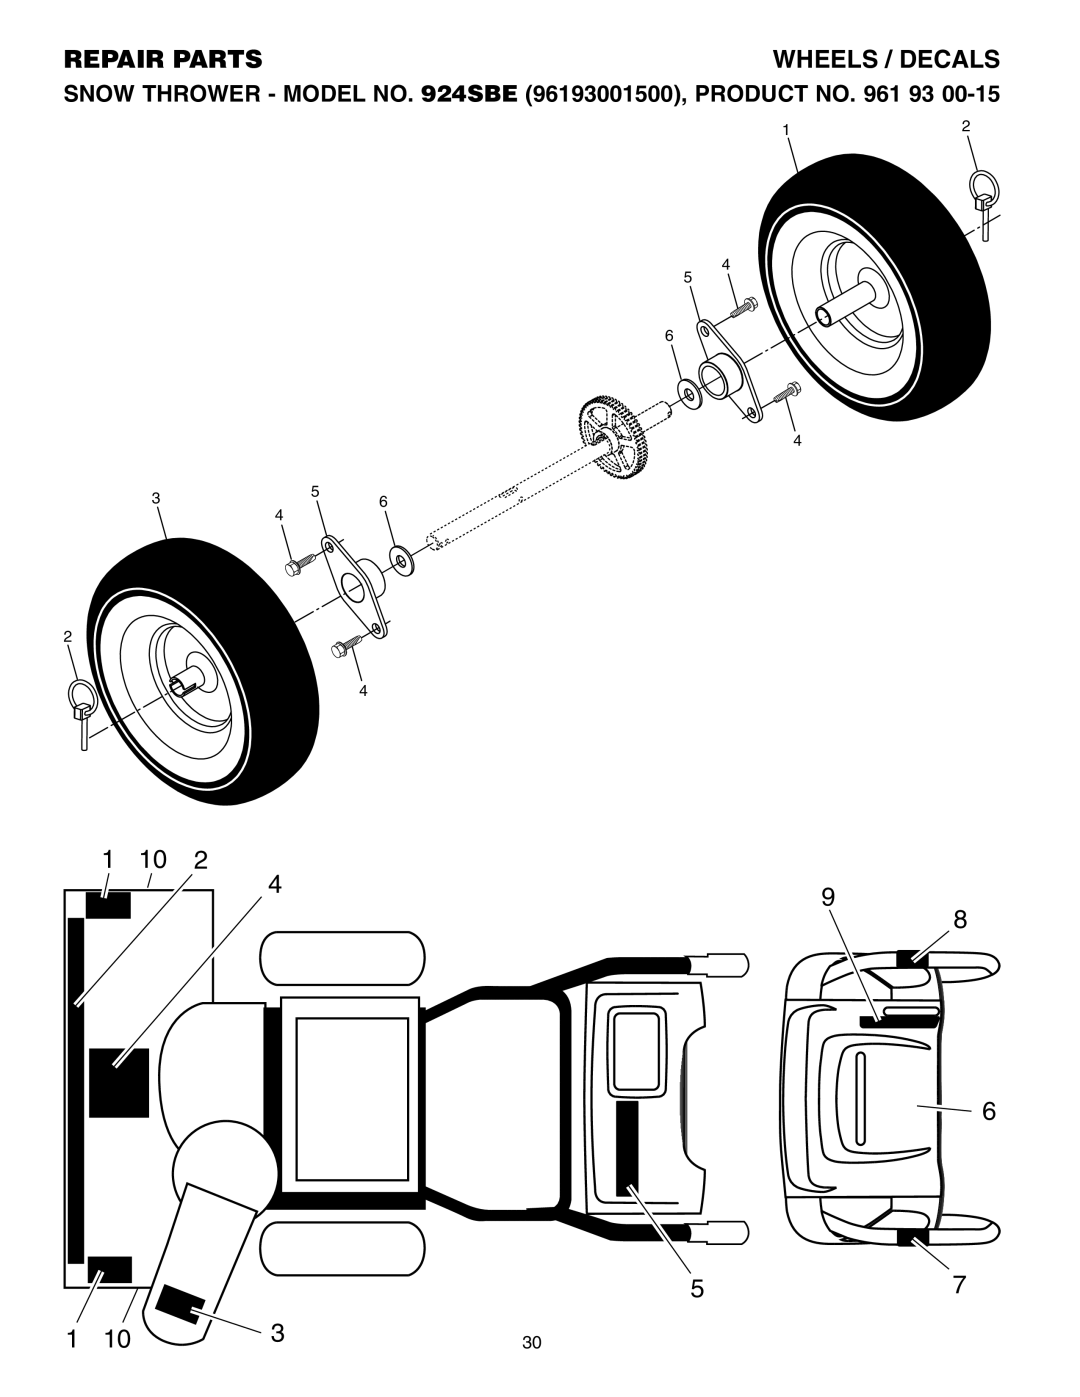 Husqvarna 924SBE owner manual Wheels / Decals, Repair Parts, 12 4 